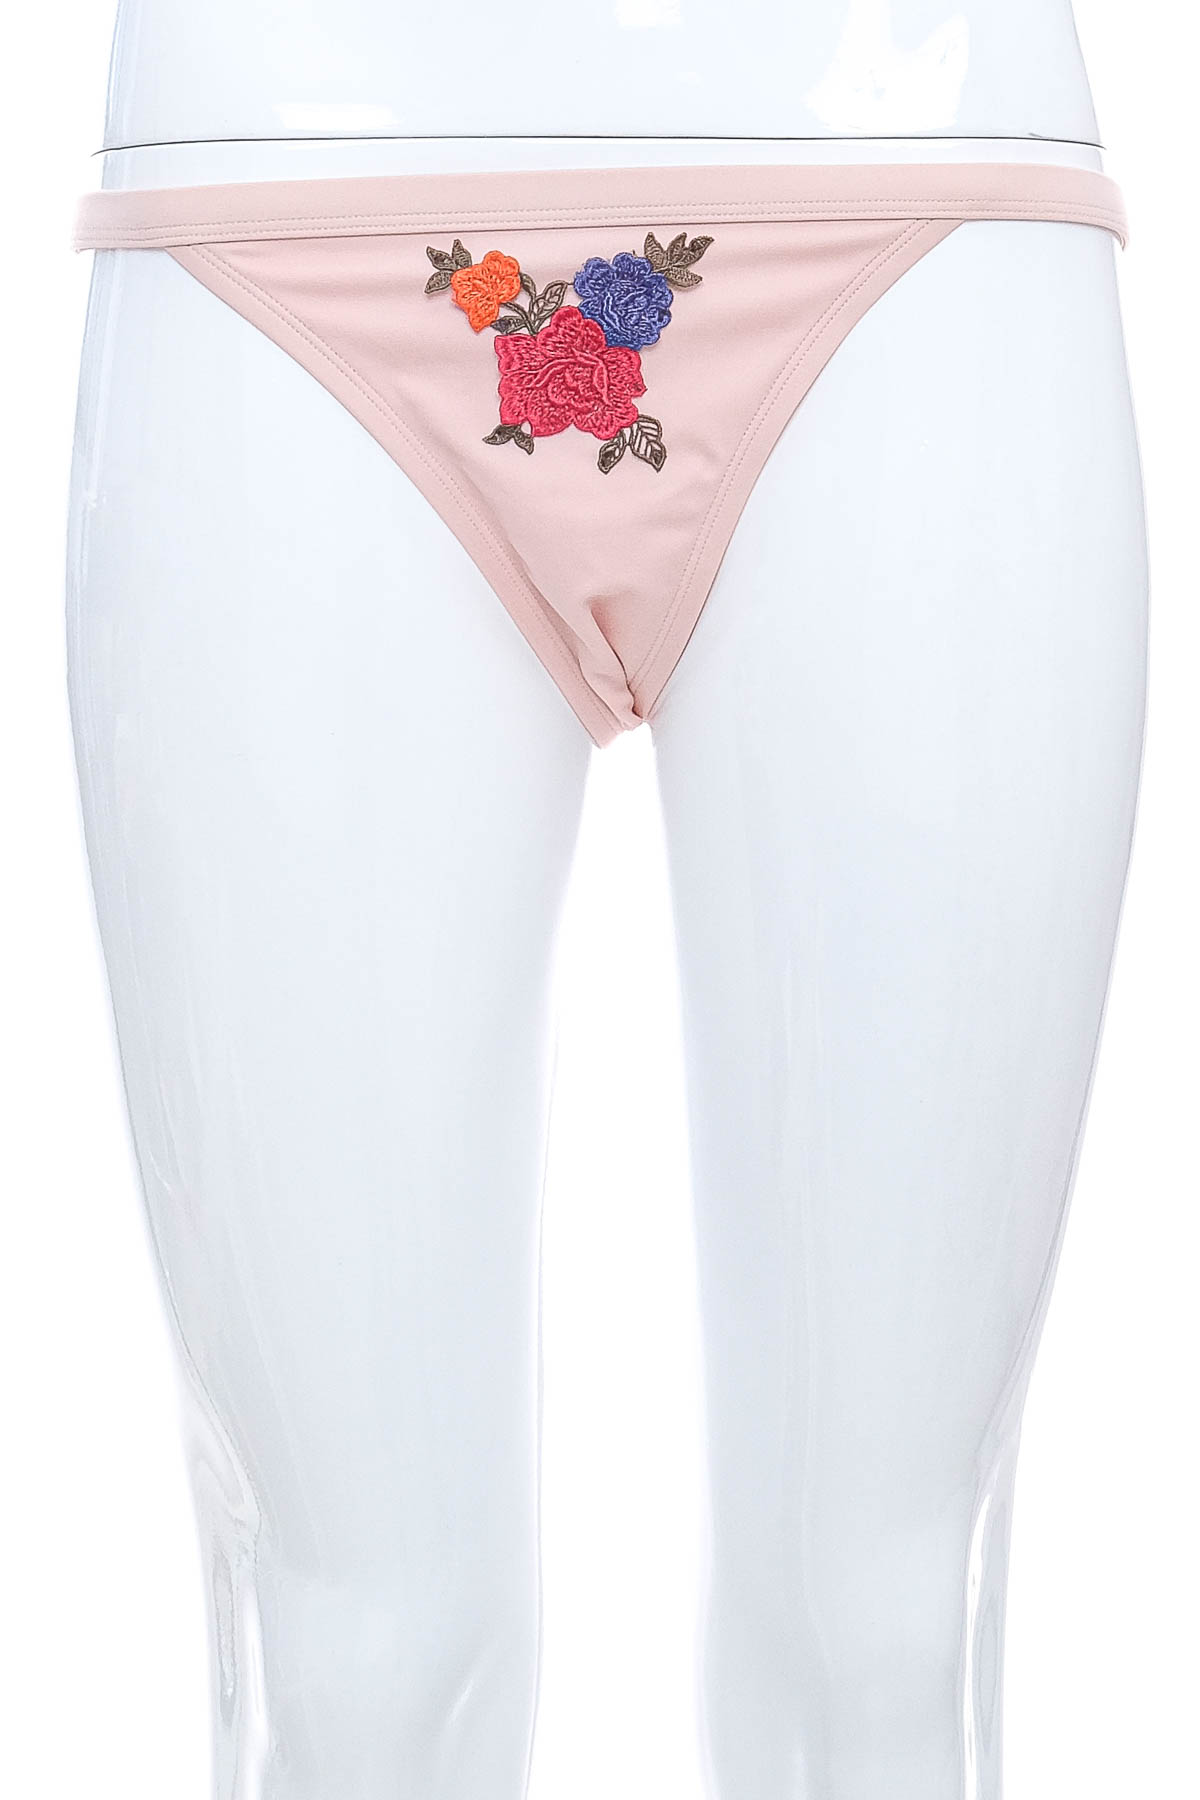 Women's swimsuit bottoms - Mint & Berry - 0